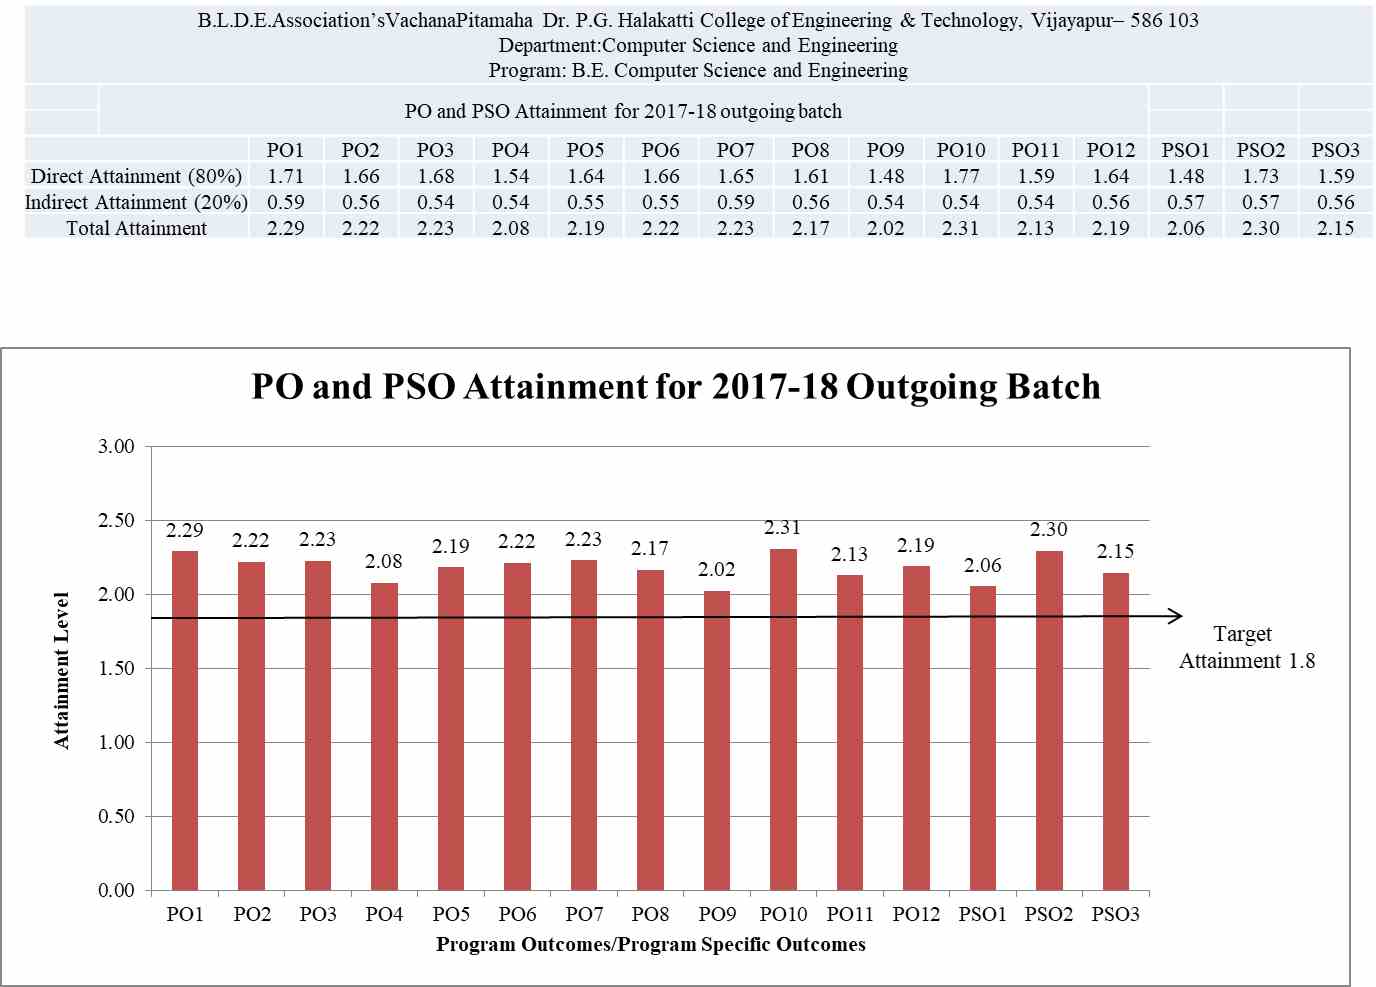 po-pso-attainment-for-2017-18-outgoing-batch